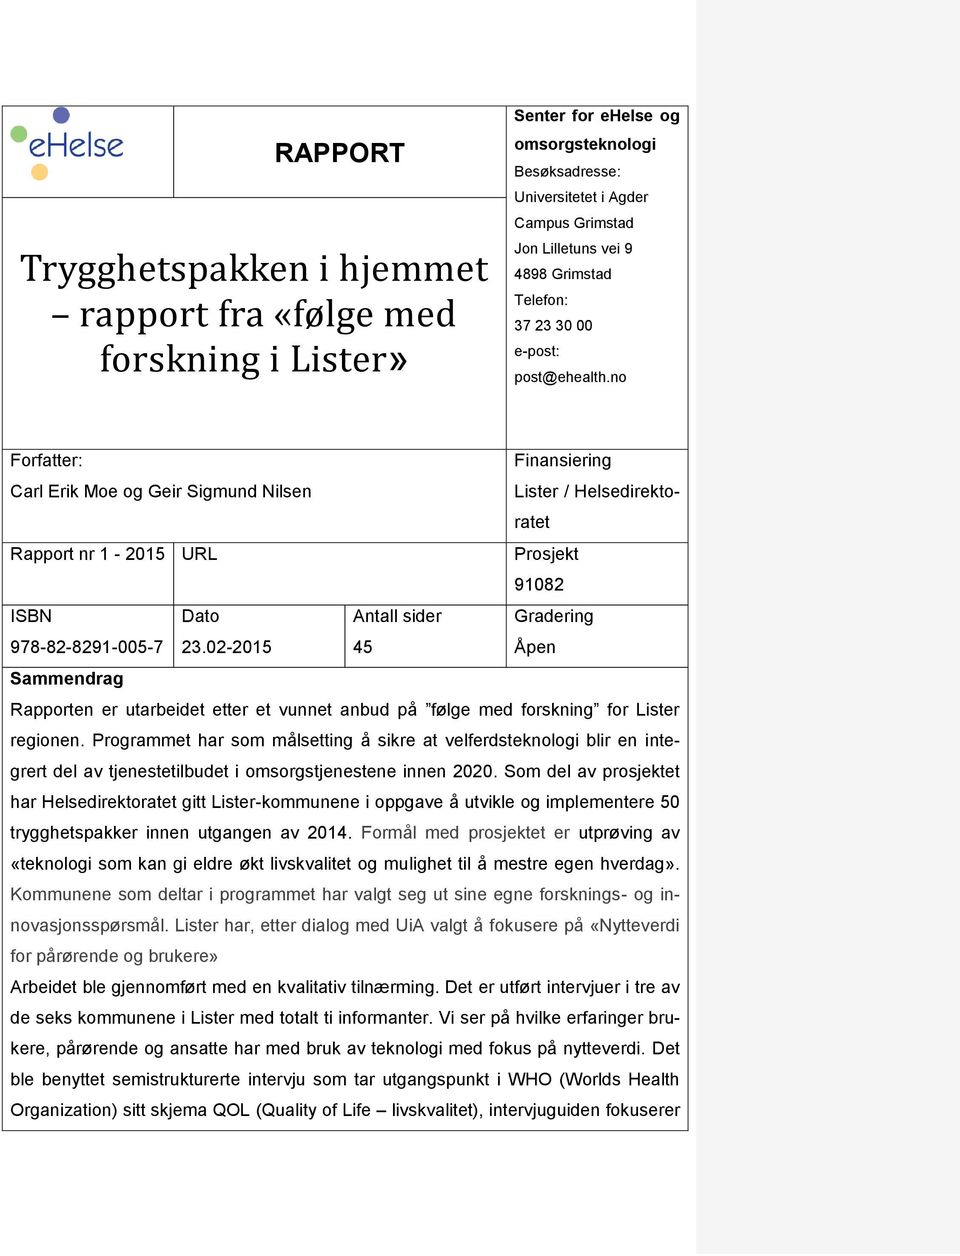 no Forfatter: Finansiering Carl Erik Moe og Geir Sigmund Nilsen Lister / Helsedirektoratet Rapport nr 1-2015 URL Prosjekt 91082 ISBN Dato Antall sider Gradering 978-82-8291-005-7 23.